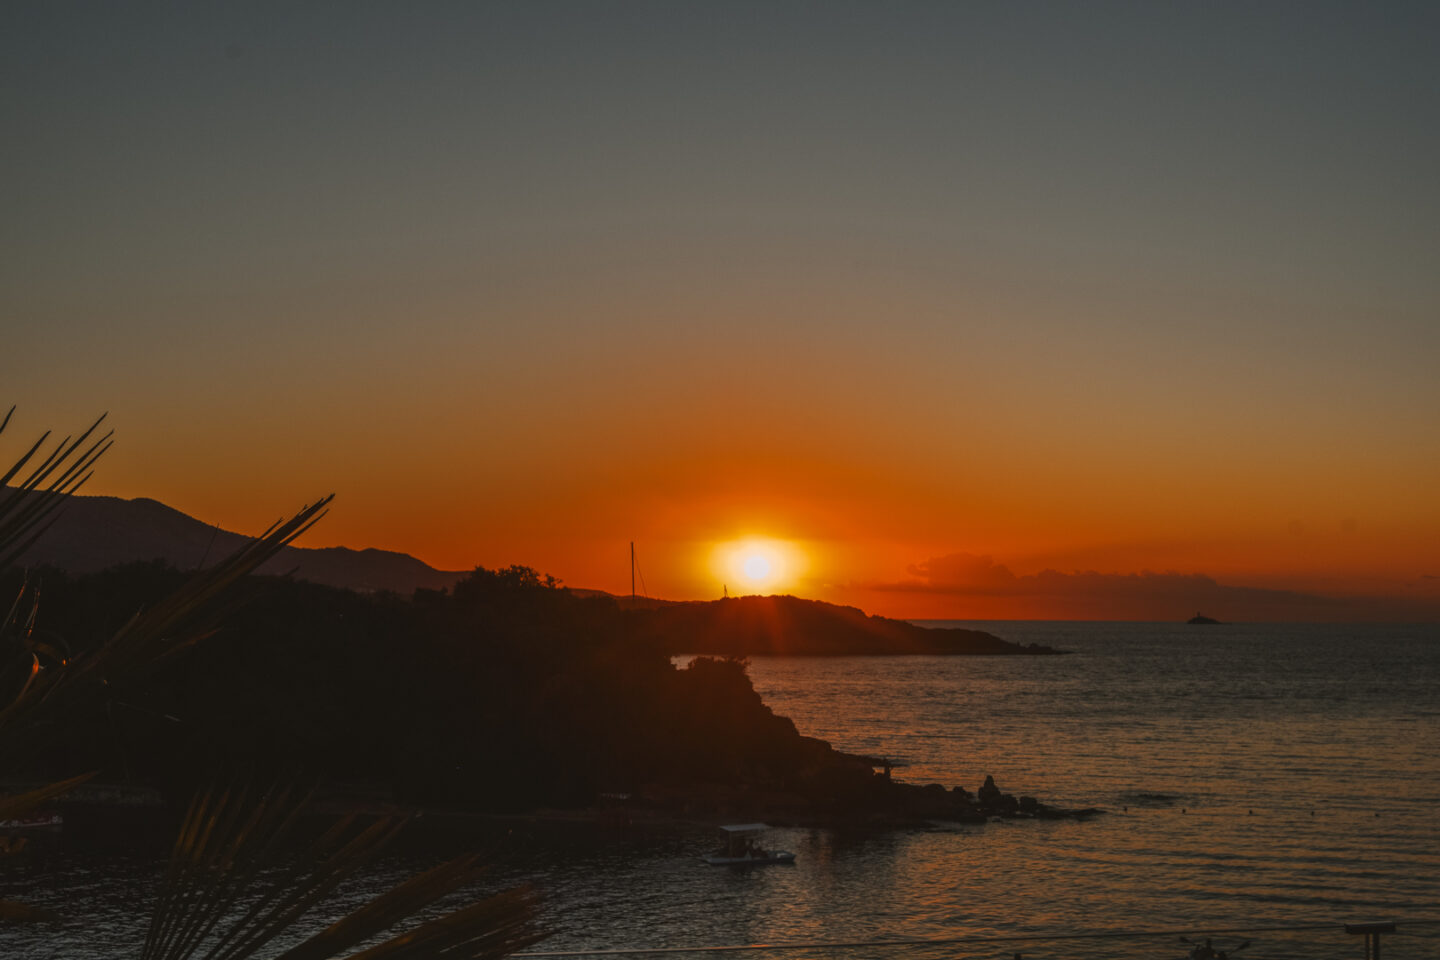 The sun setting over the Ksamil Beaches